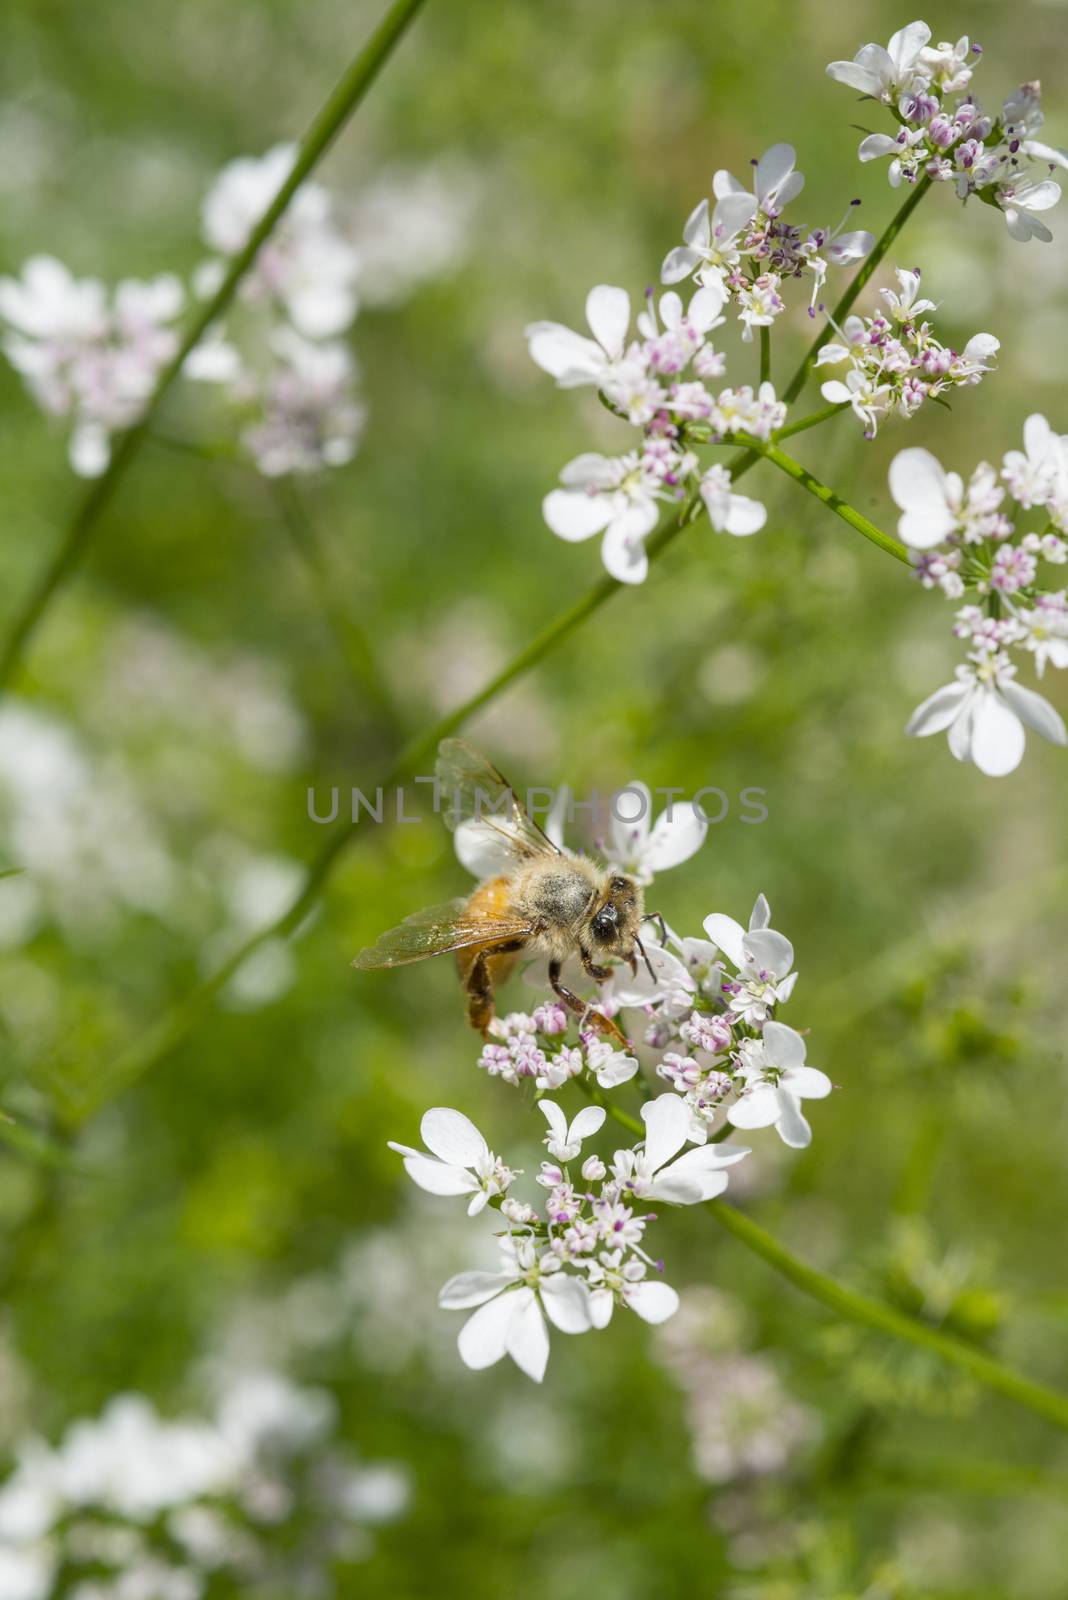 Western honey bee or European honey bee (Apis mellifera) on gard by Njean